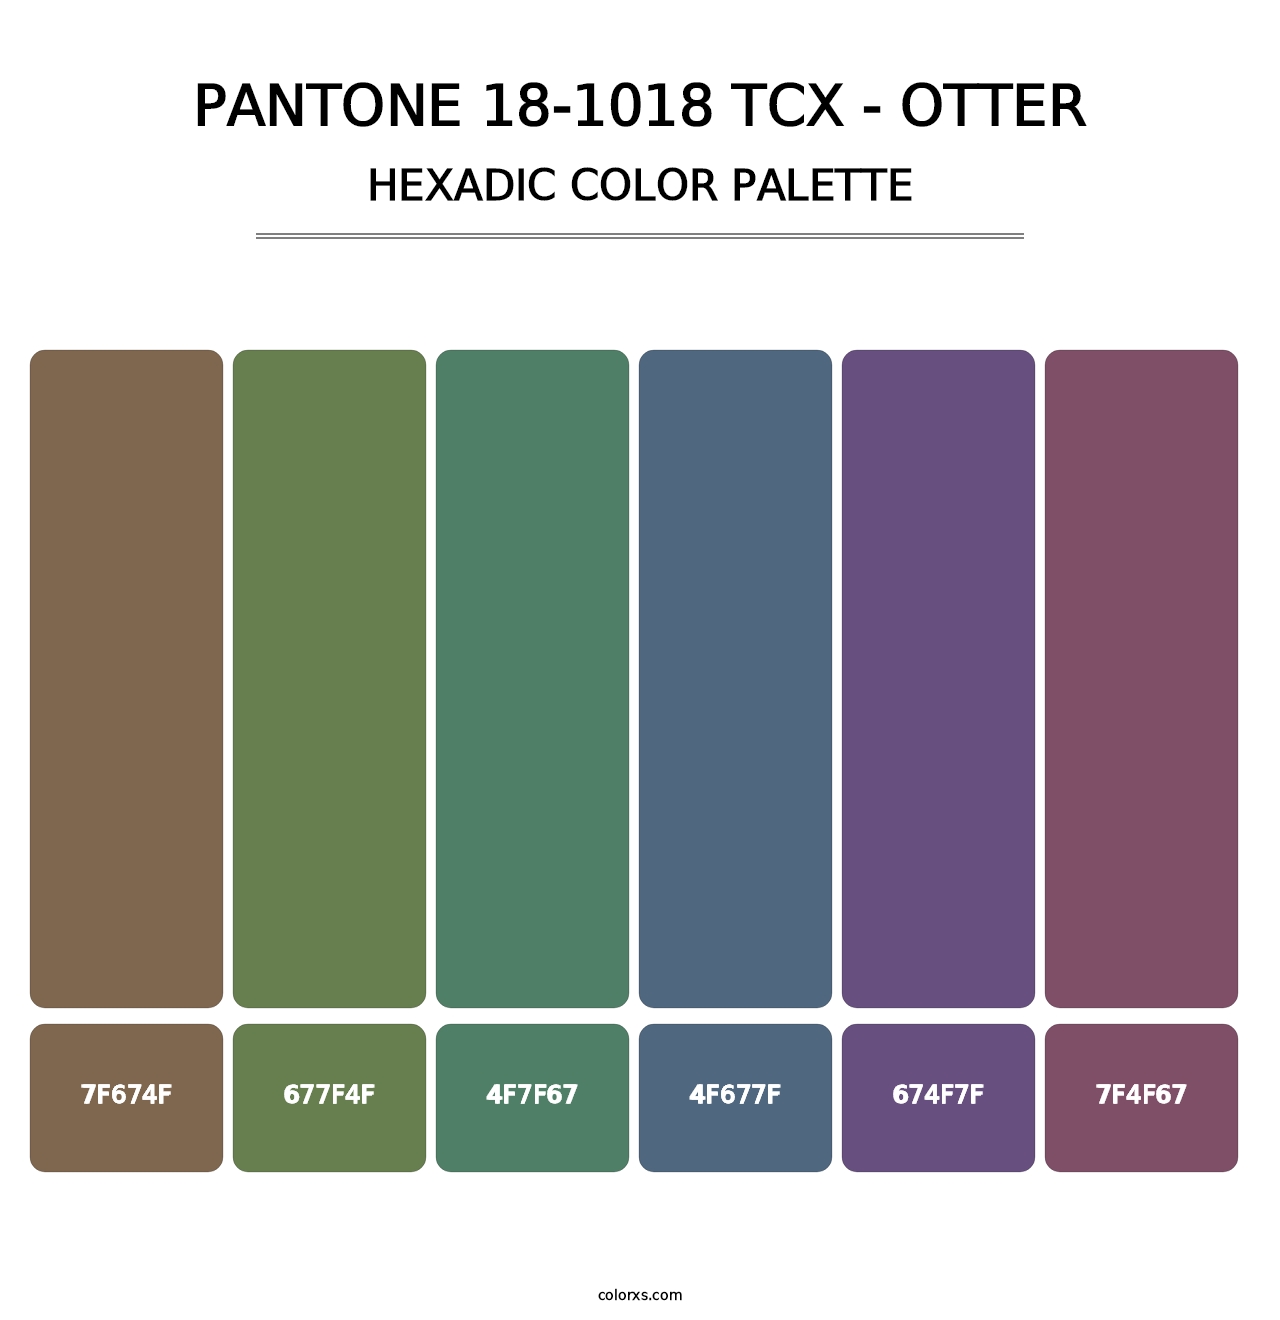 PANTONE 18-1018 TCX - Otter - Hexadic Color Palette